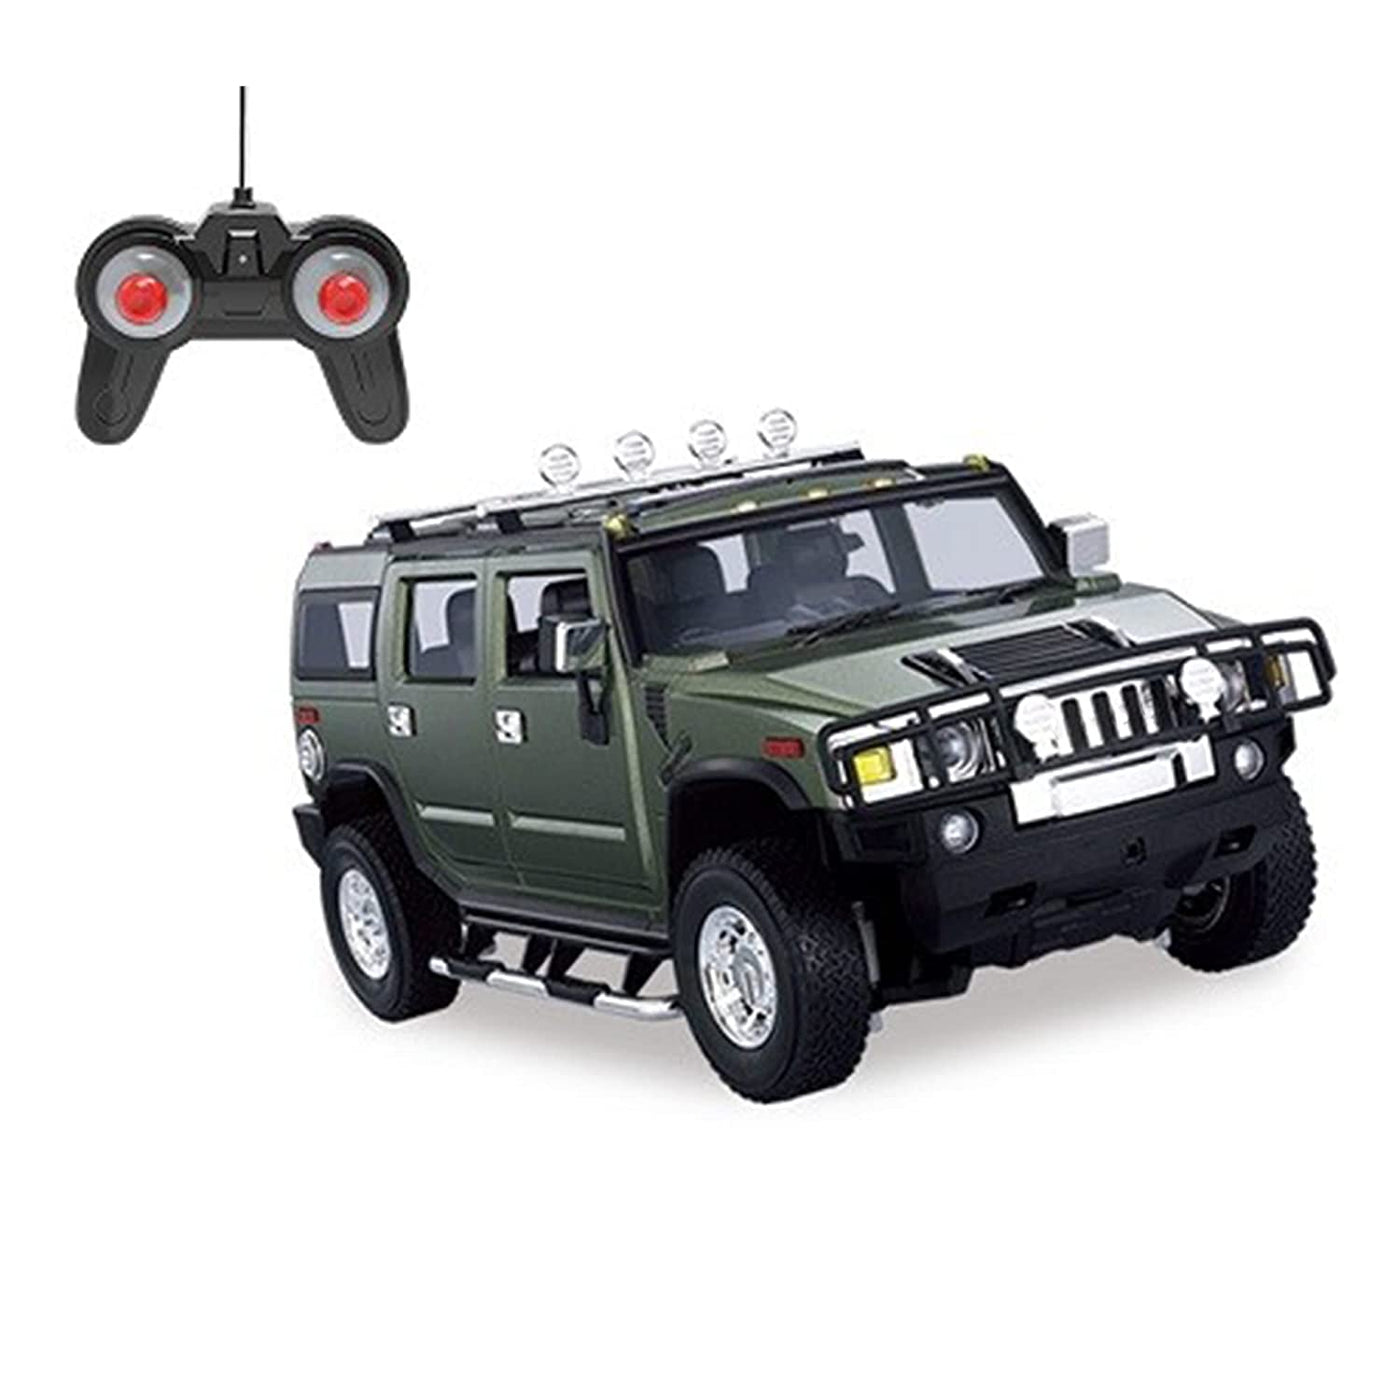 Army Vehicle RC Scale 1:24 - Green | Playzu